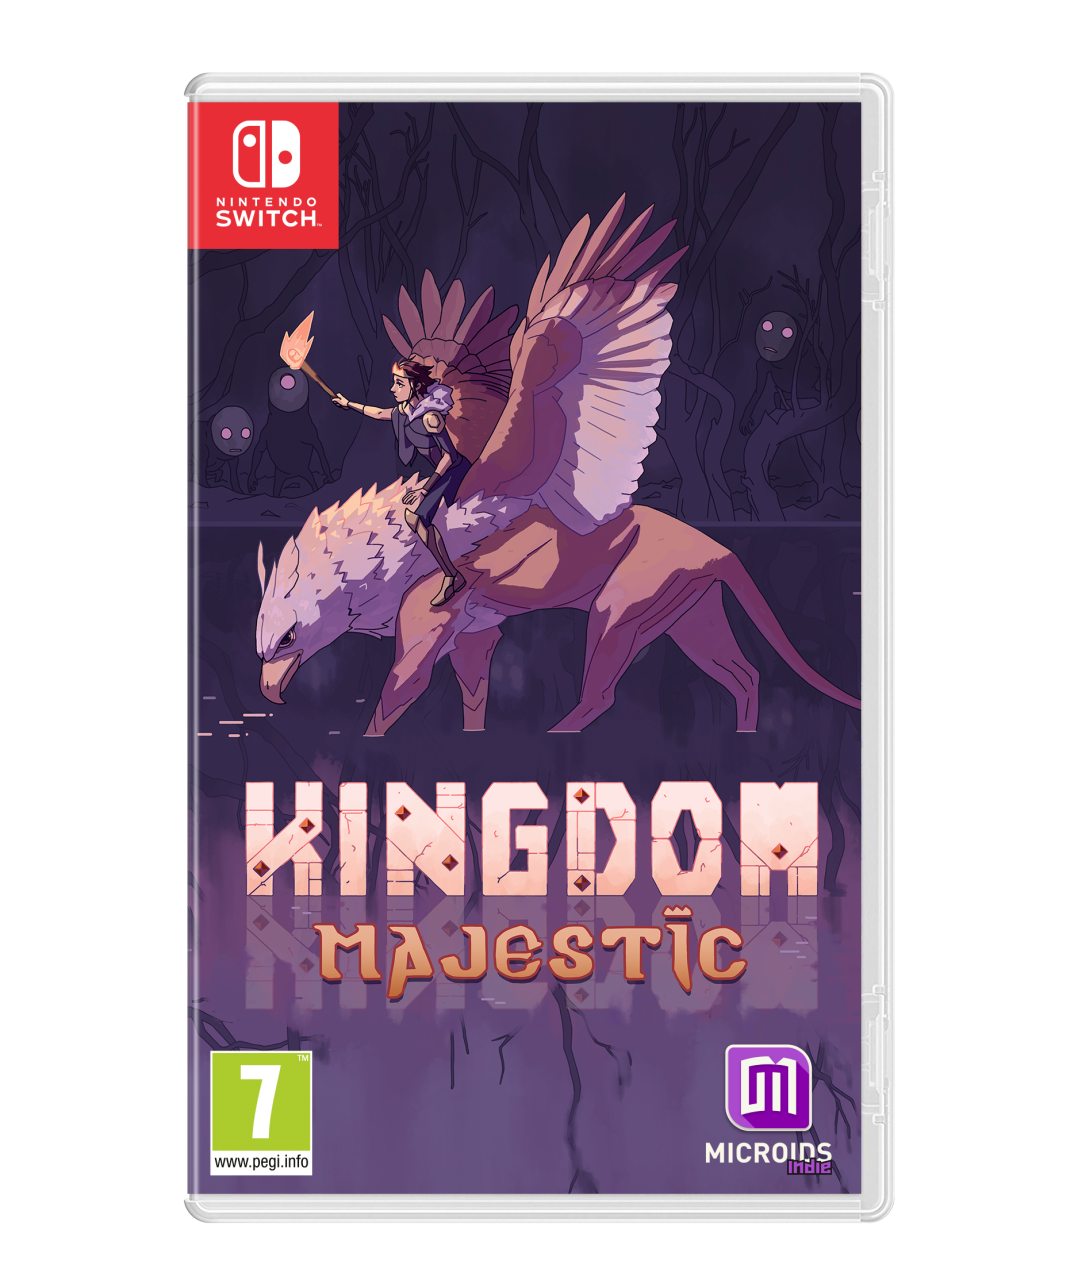 Kingdom Majestic Nintendo Switch cover (Microids)